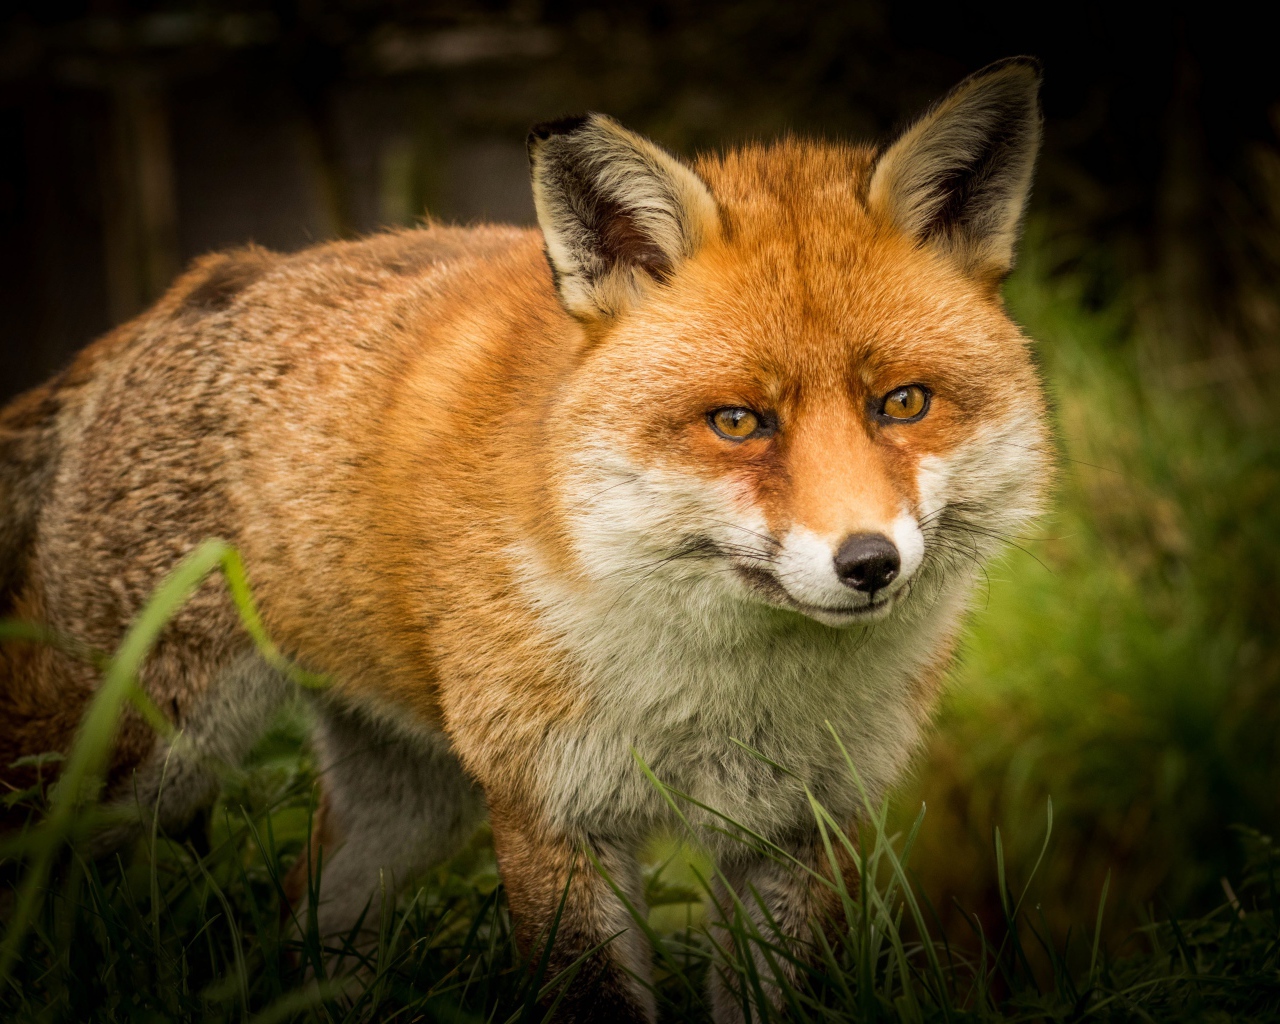 A large predatory fox sneaks through the green grass.